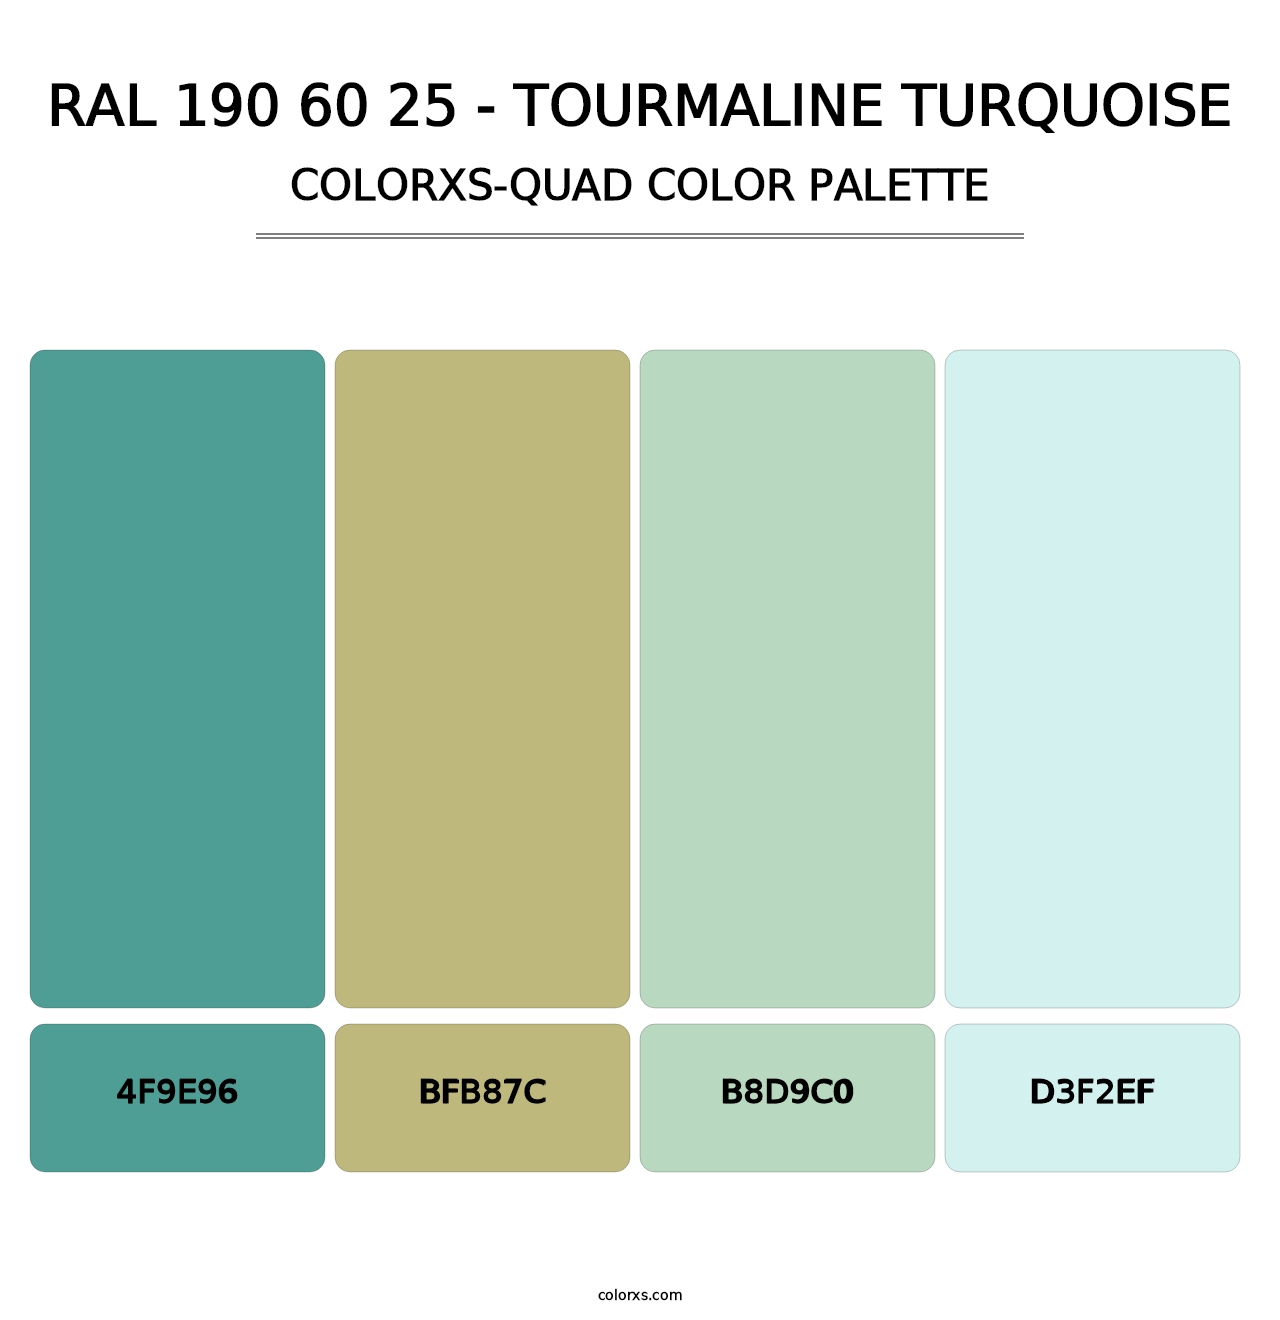 RAL 190 60 25 - Tourmaline Turquoise - Colorxs Quad Palette